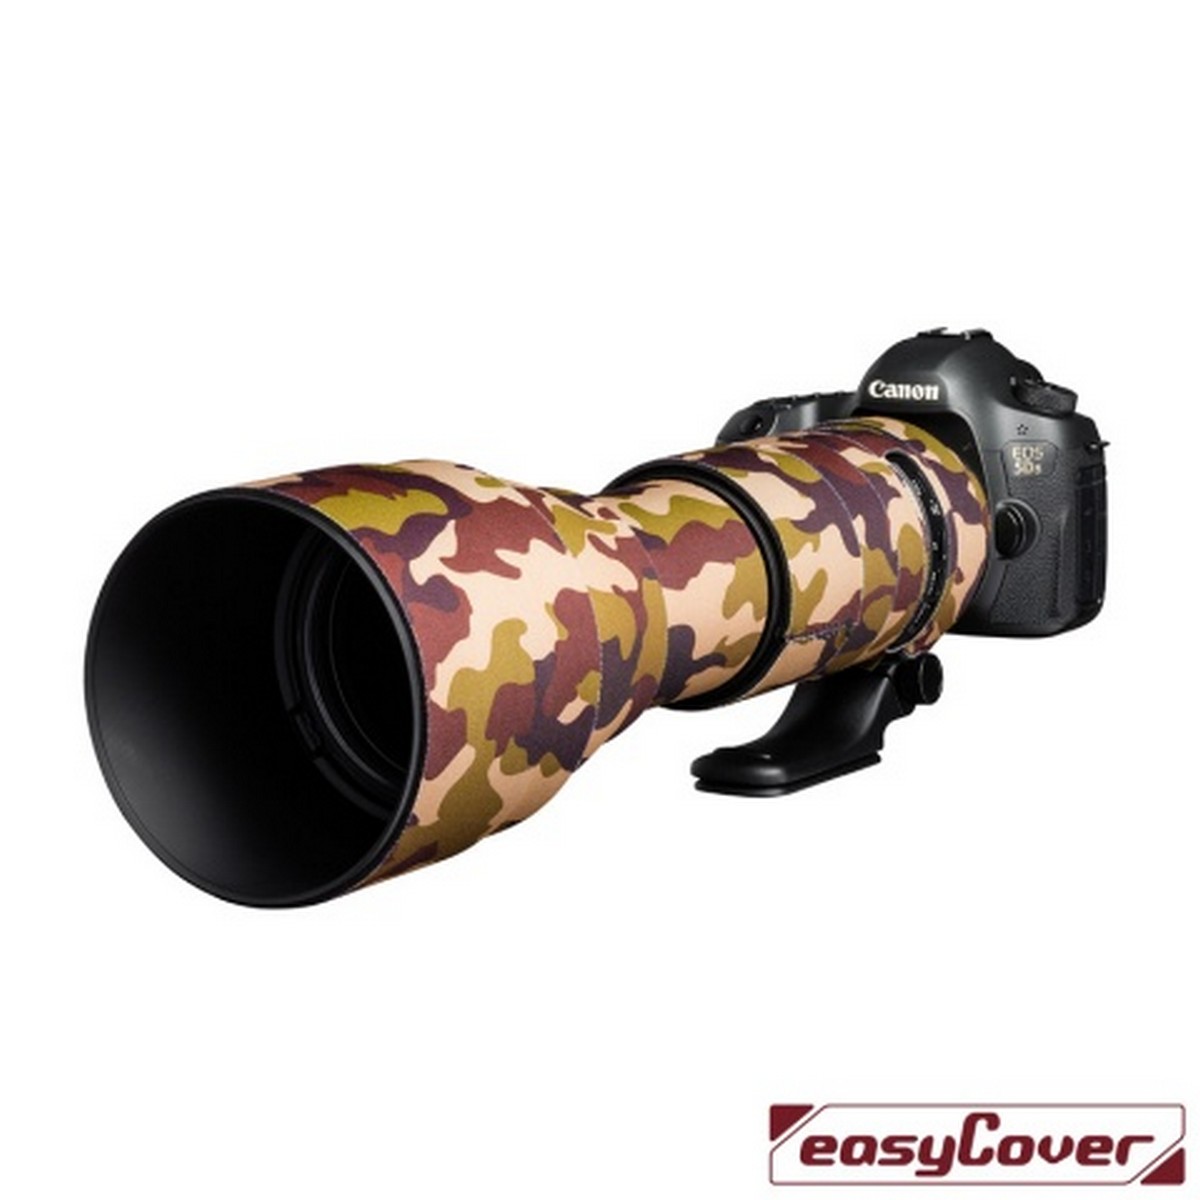 Easycover Lens Oak Objektivschutz für Tamron 150-600 mm 1:5-6,3 Di VC USD G2 Braun Camouflage